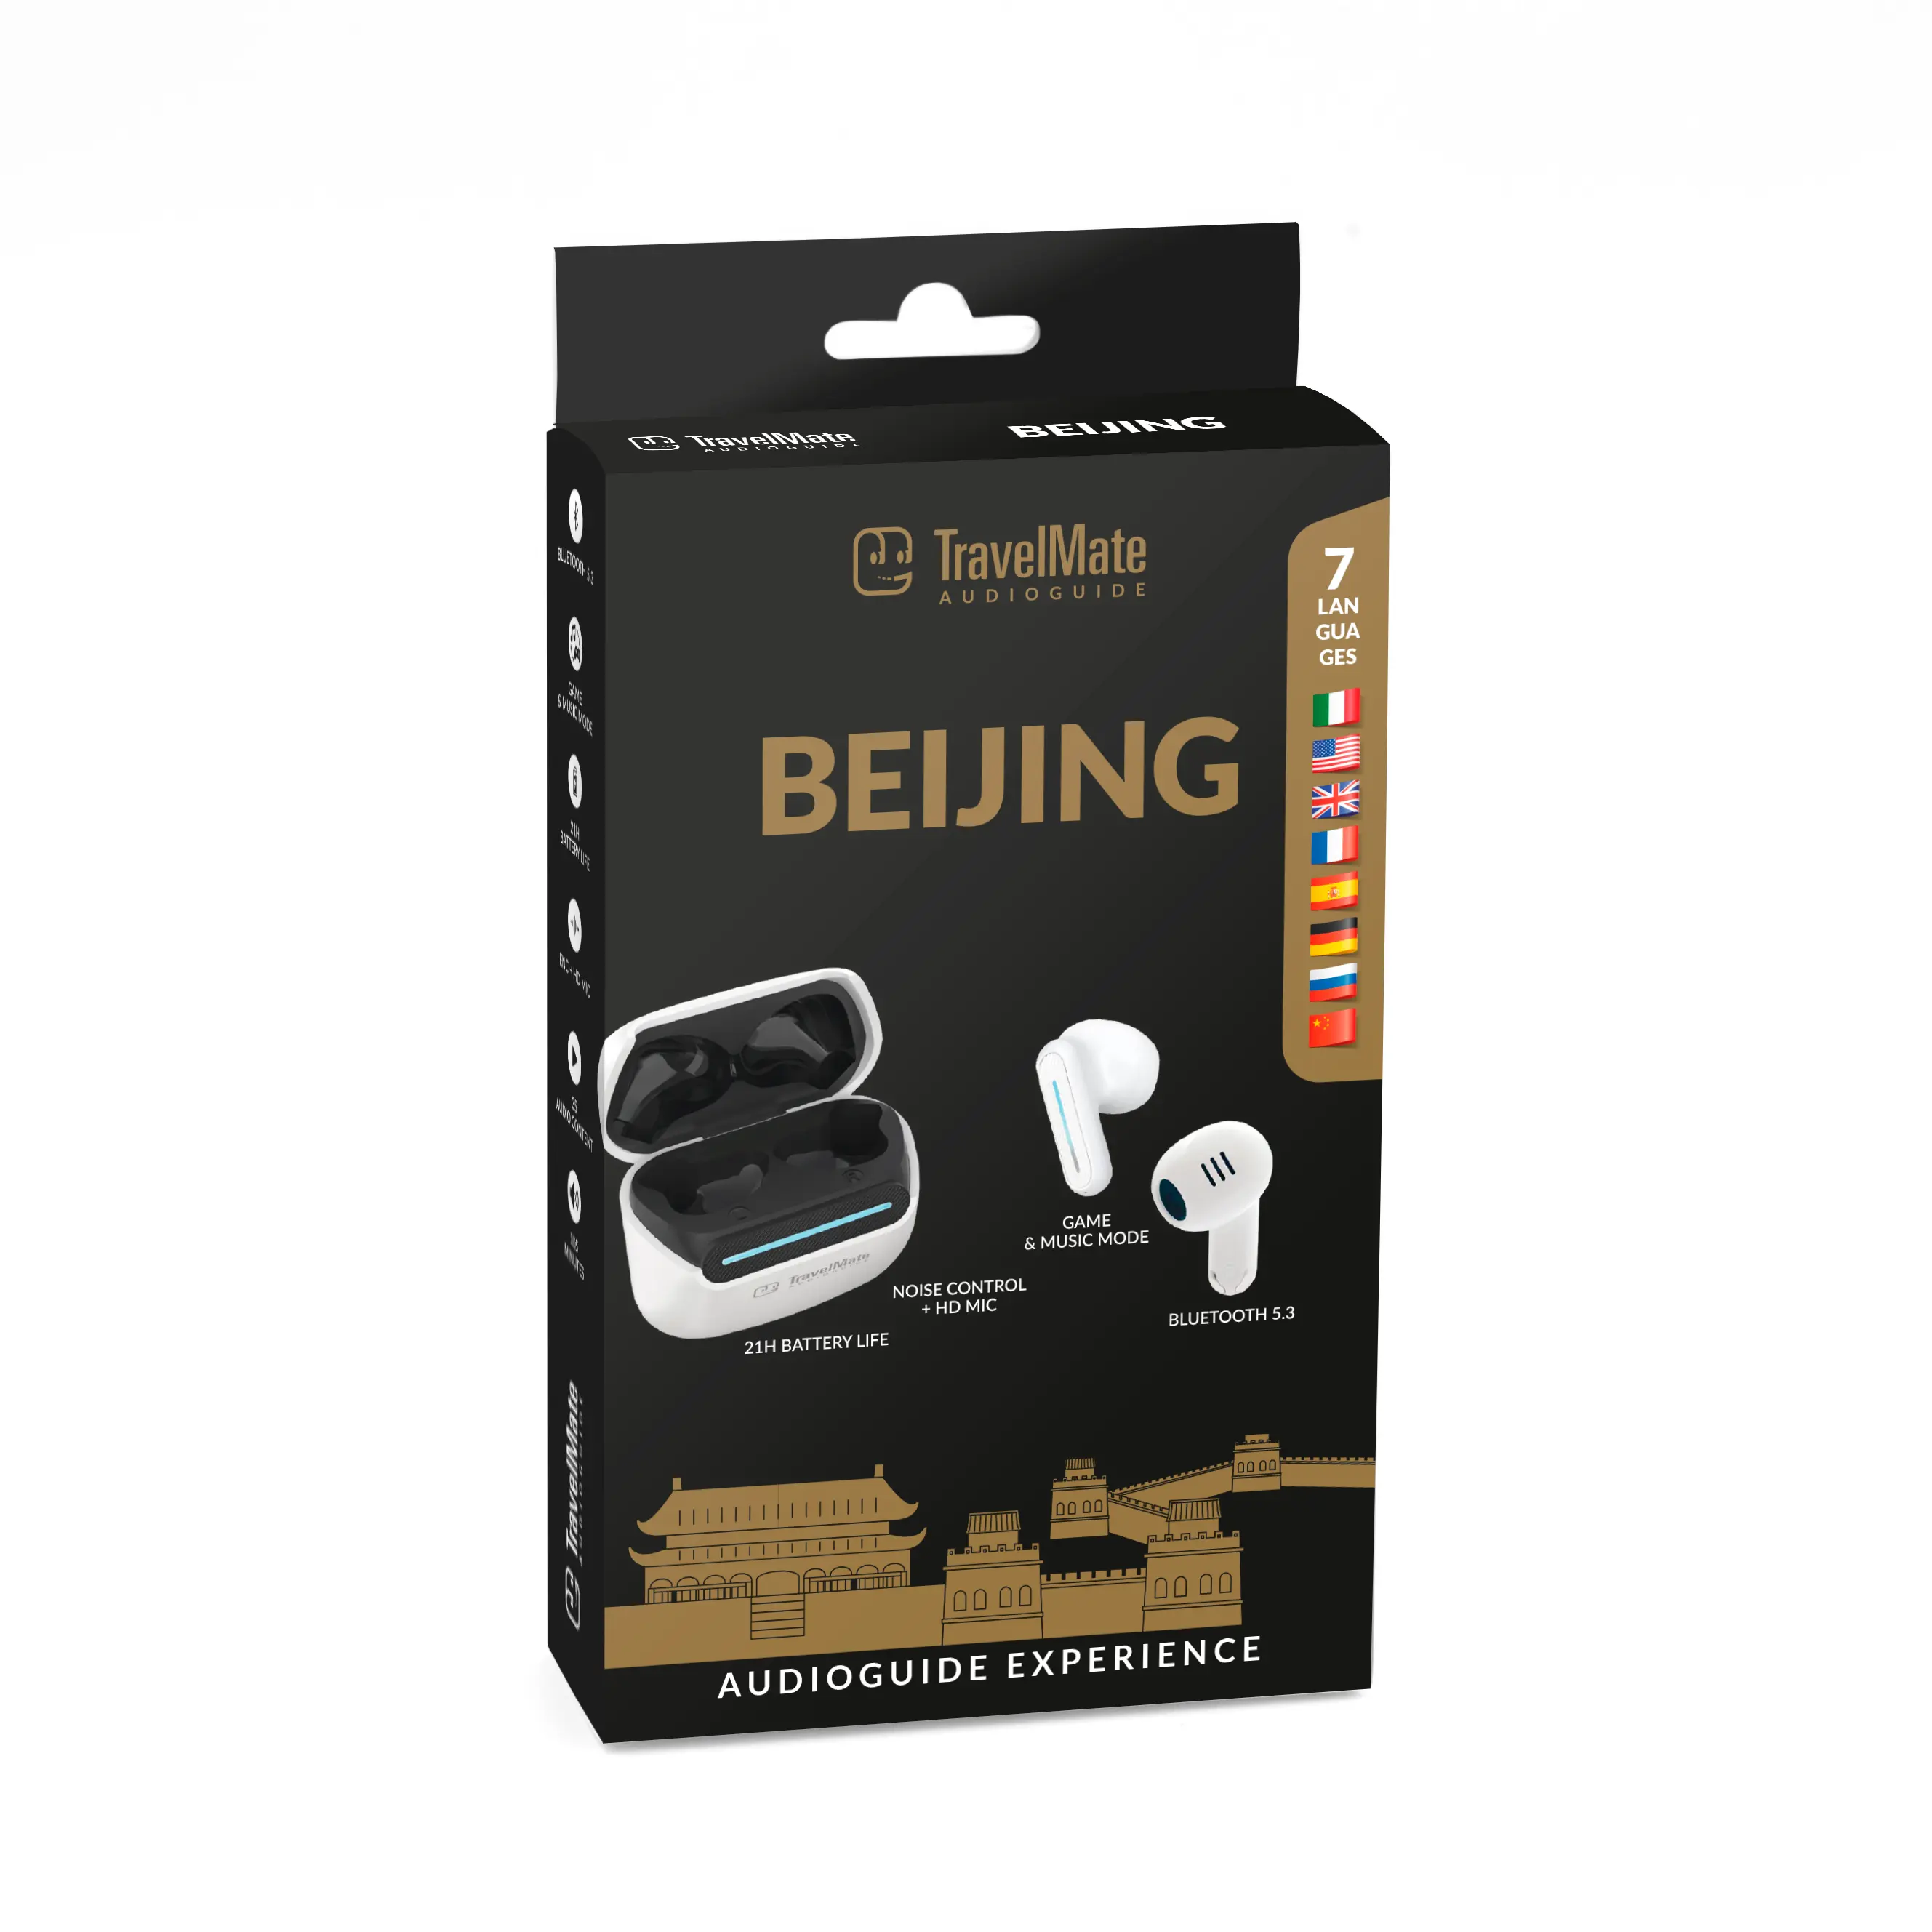 Venta caliente Beijing Tourist Audio Guides Bluetooth Audio Guides para accesorios de viaje minoristas